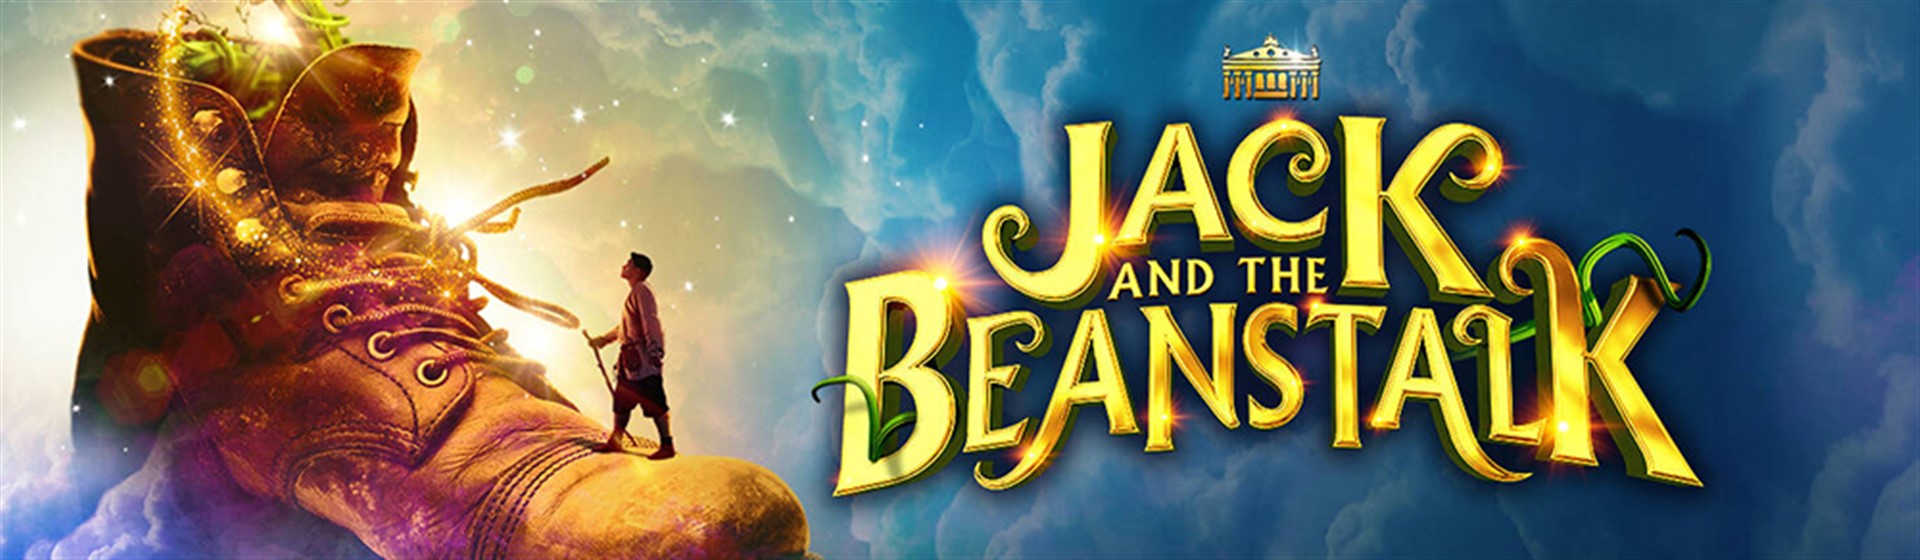 Jack & the Beanstalk Pantomime: London Palladium 